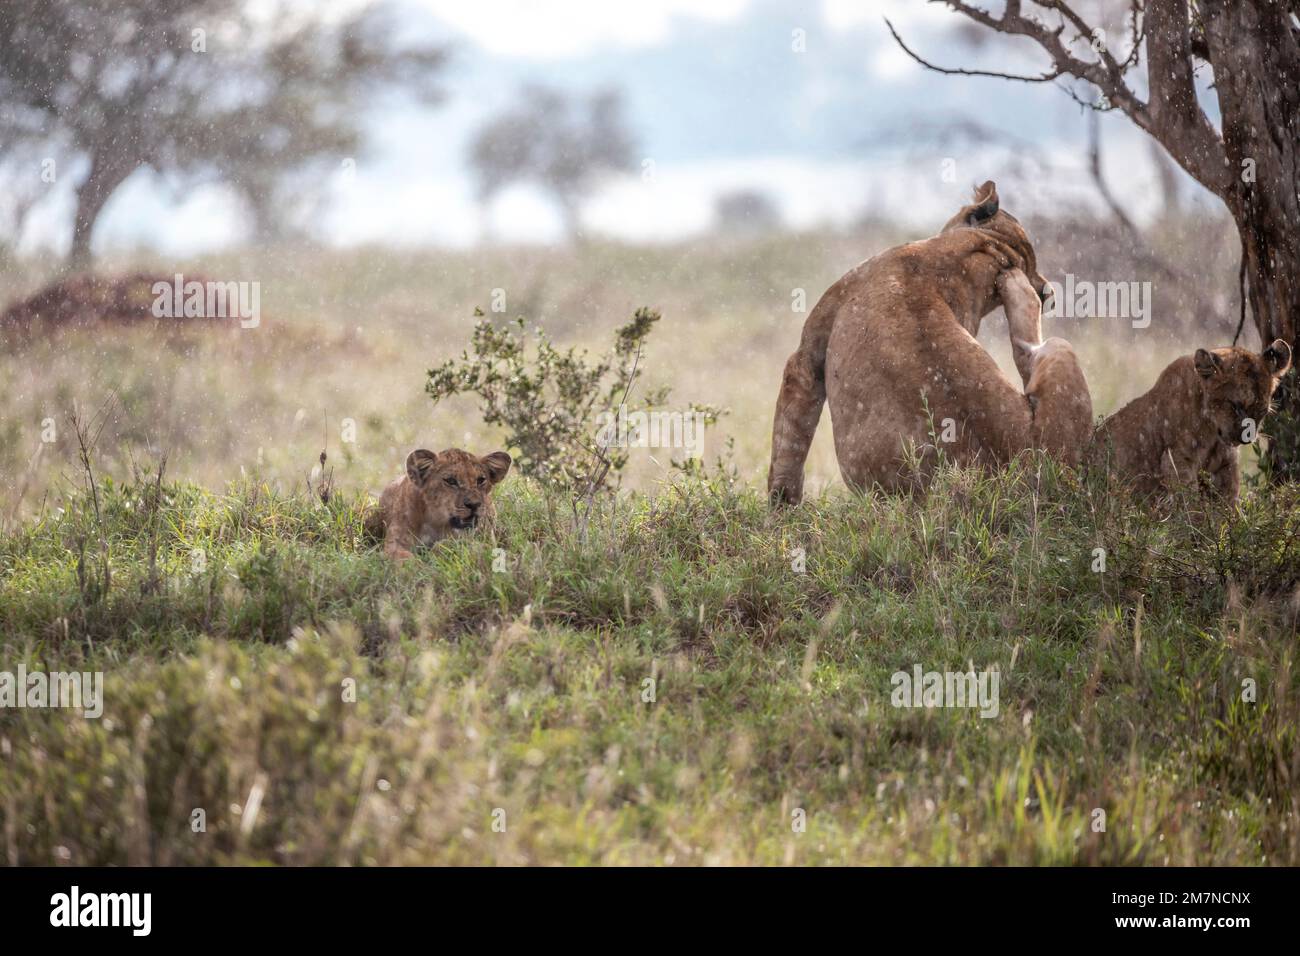 Leoni africani (Panthera leo), leonessa che giace con i suoi cuccioli nell'erba della savana, graffiandosi, Tsavo West National Park, Taita Hills, Kenya, Africa Foto Stock